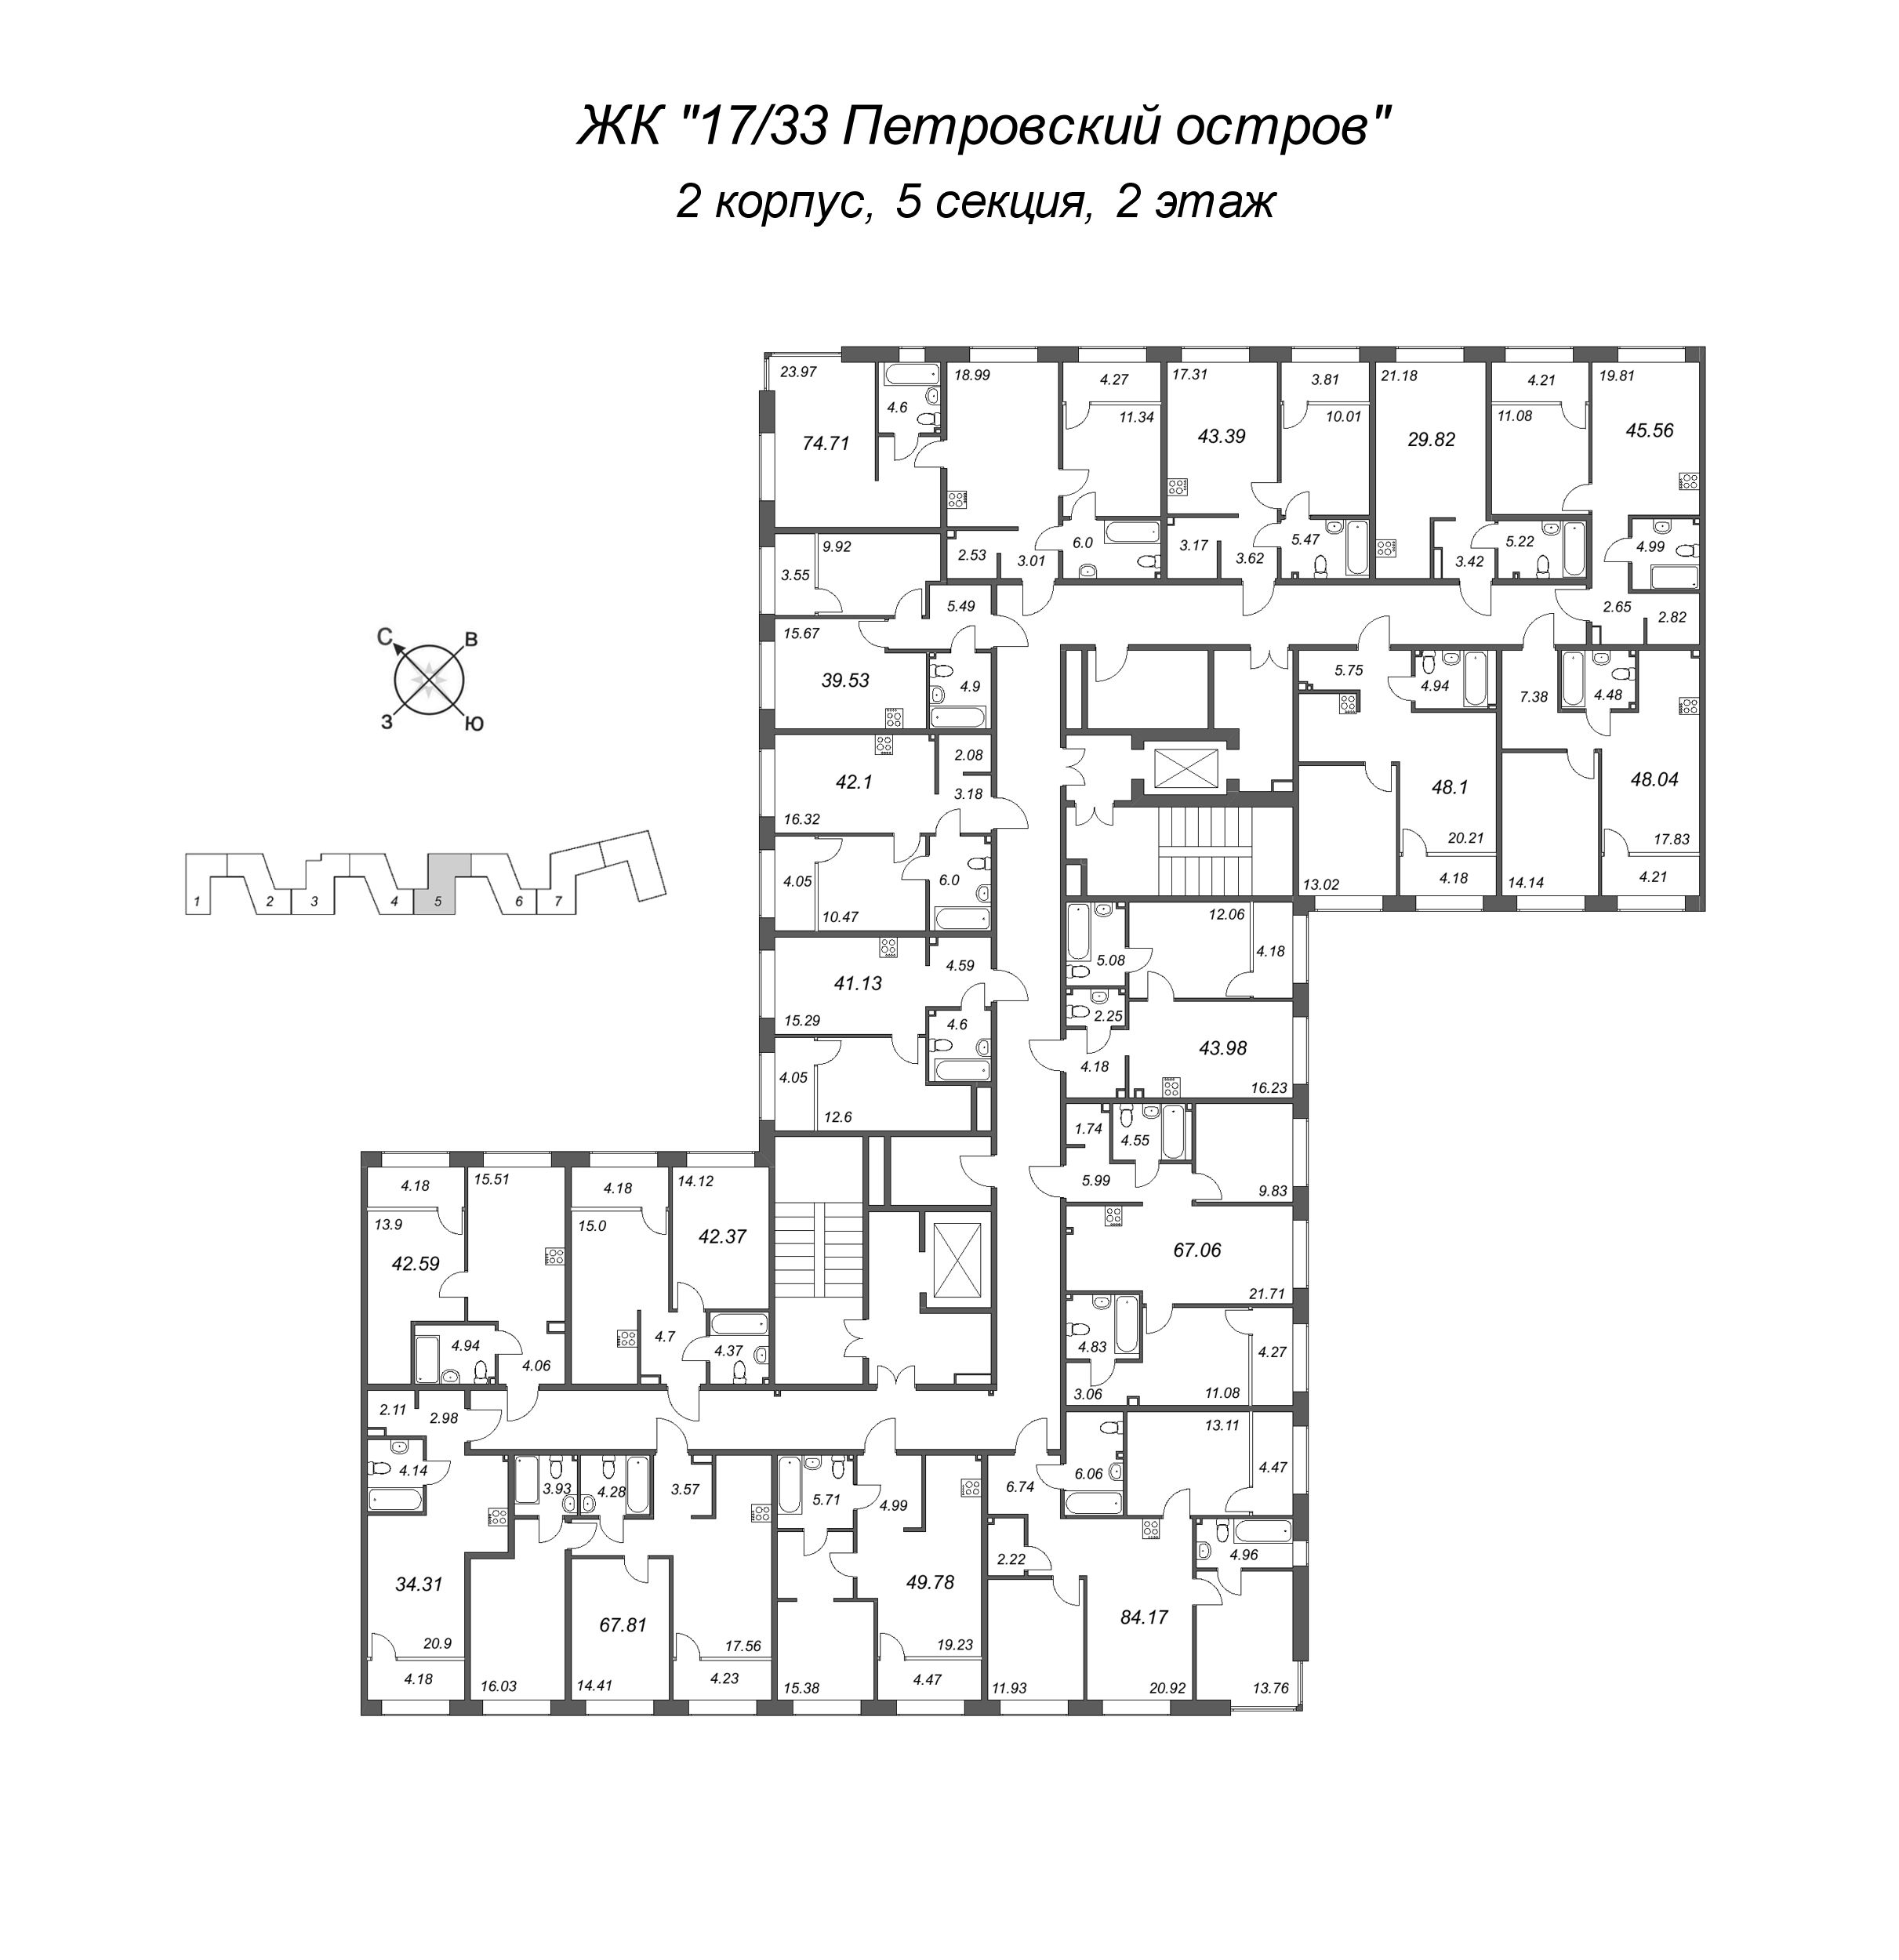 3-комнатная (Евро) квартира, 67.81 м² - планировка этажа